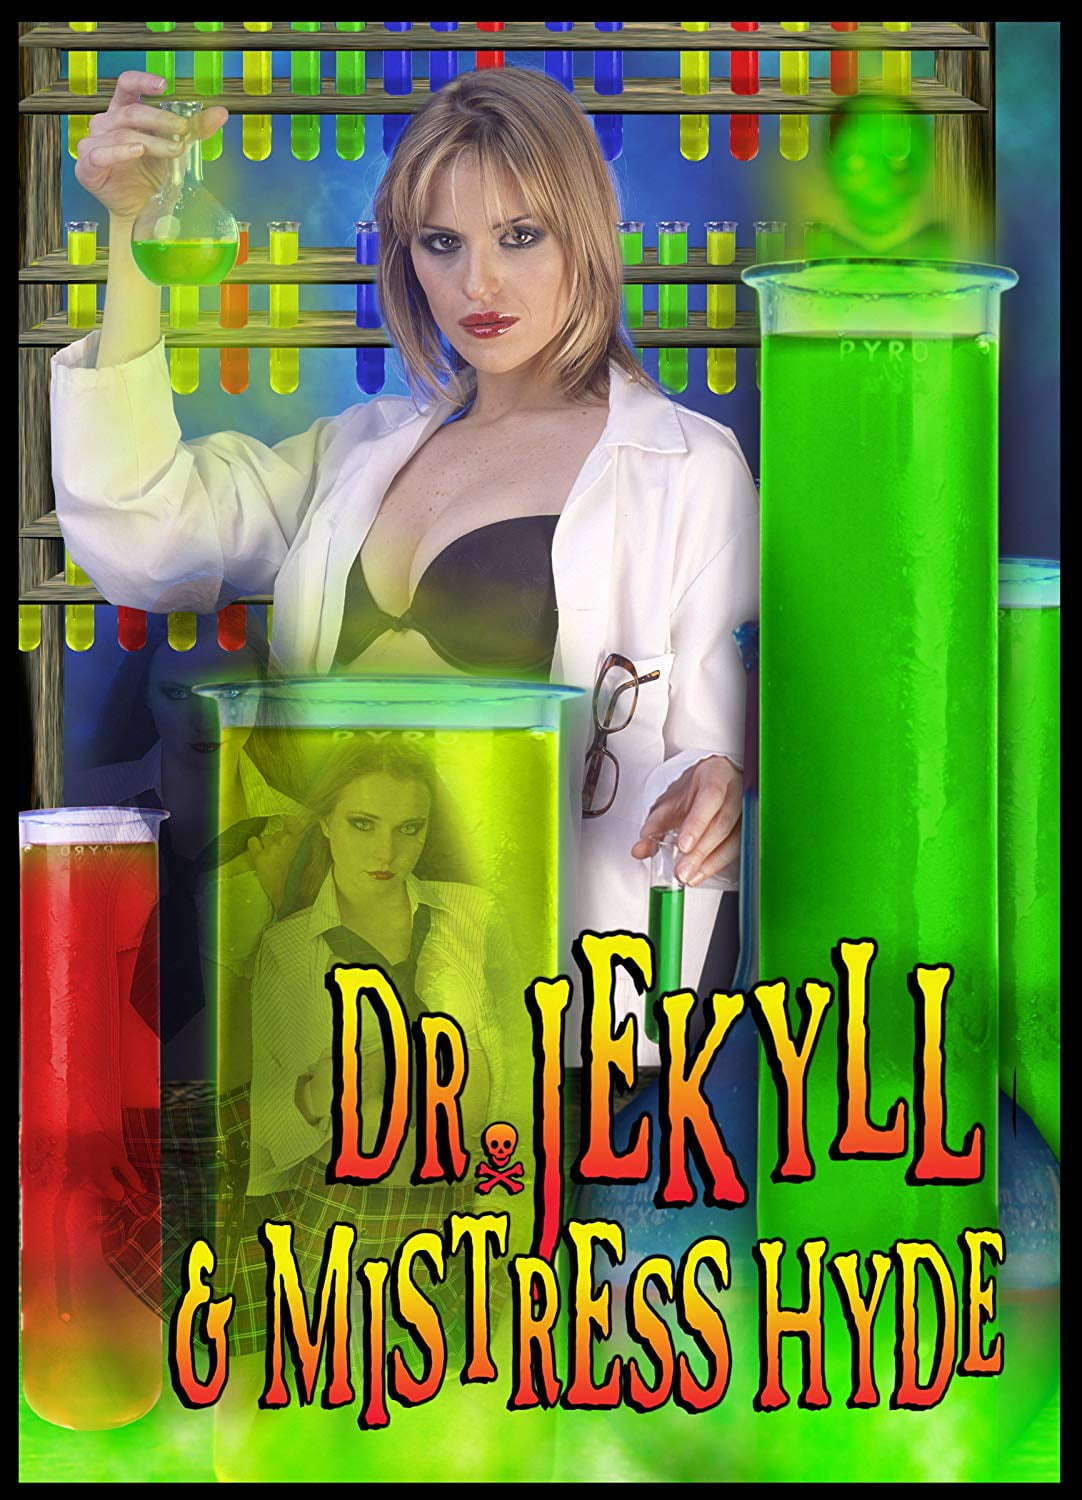 Dr jekyll & mistress hyde